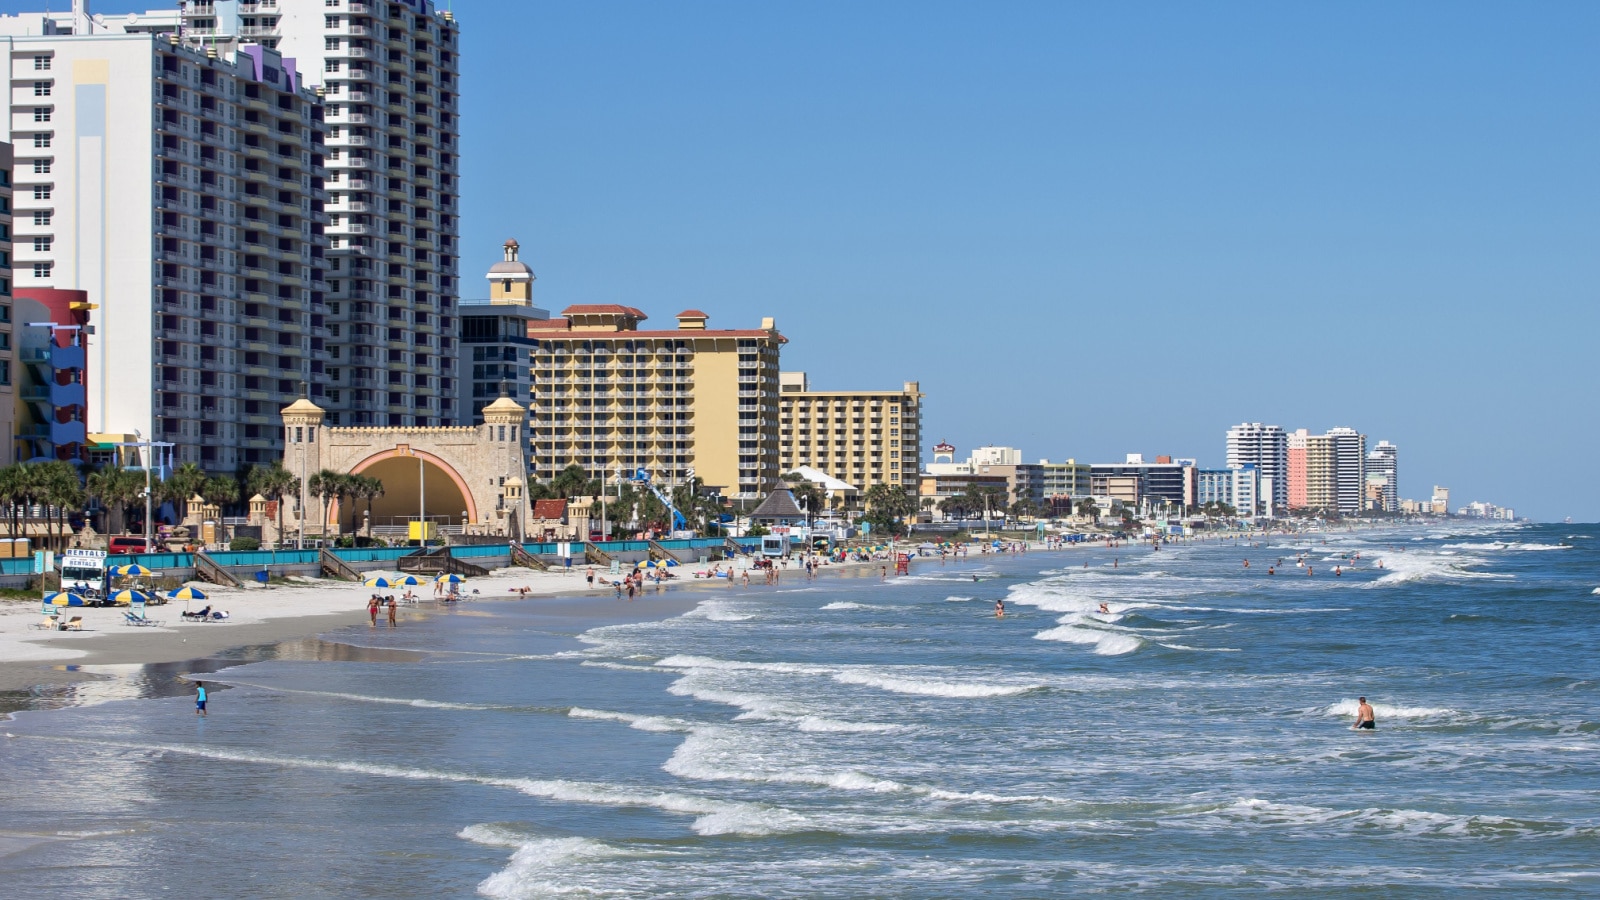 Daytona Beach Florida Boardwalk and shoreline